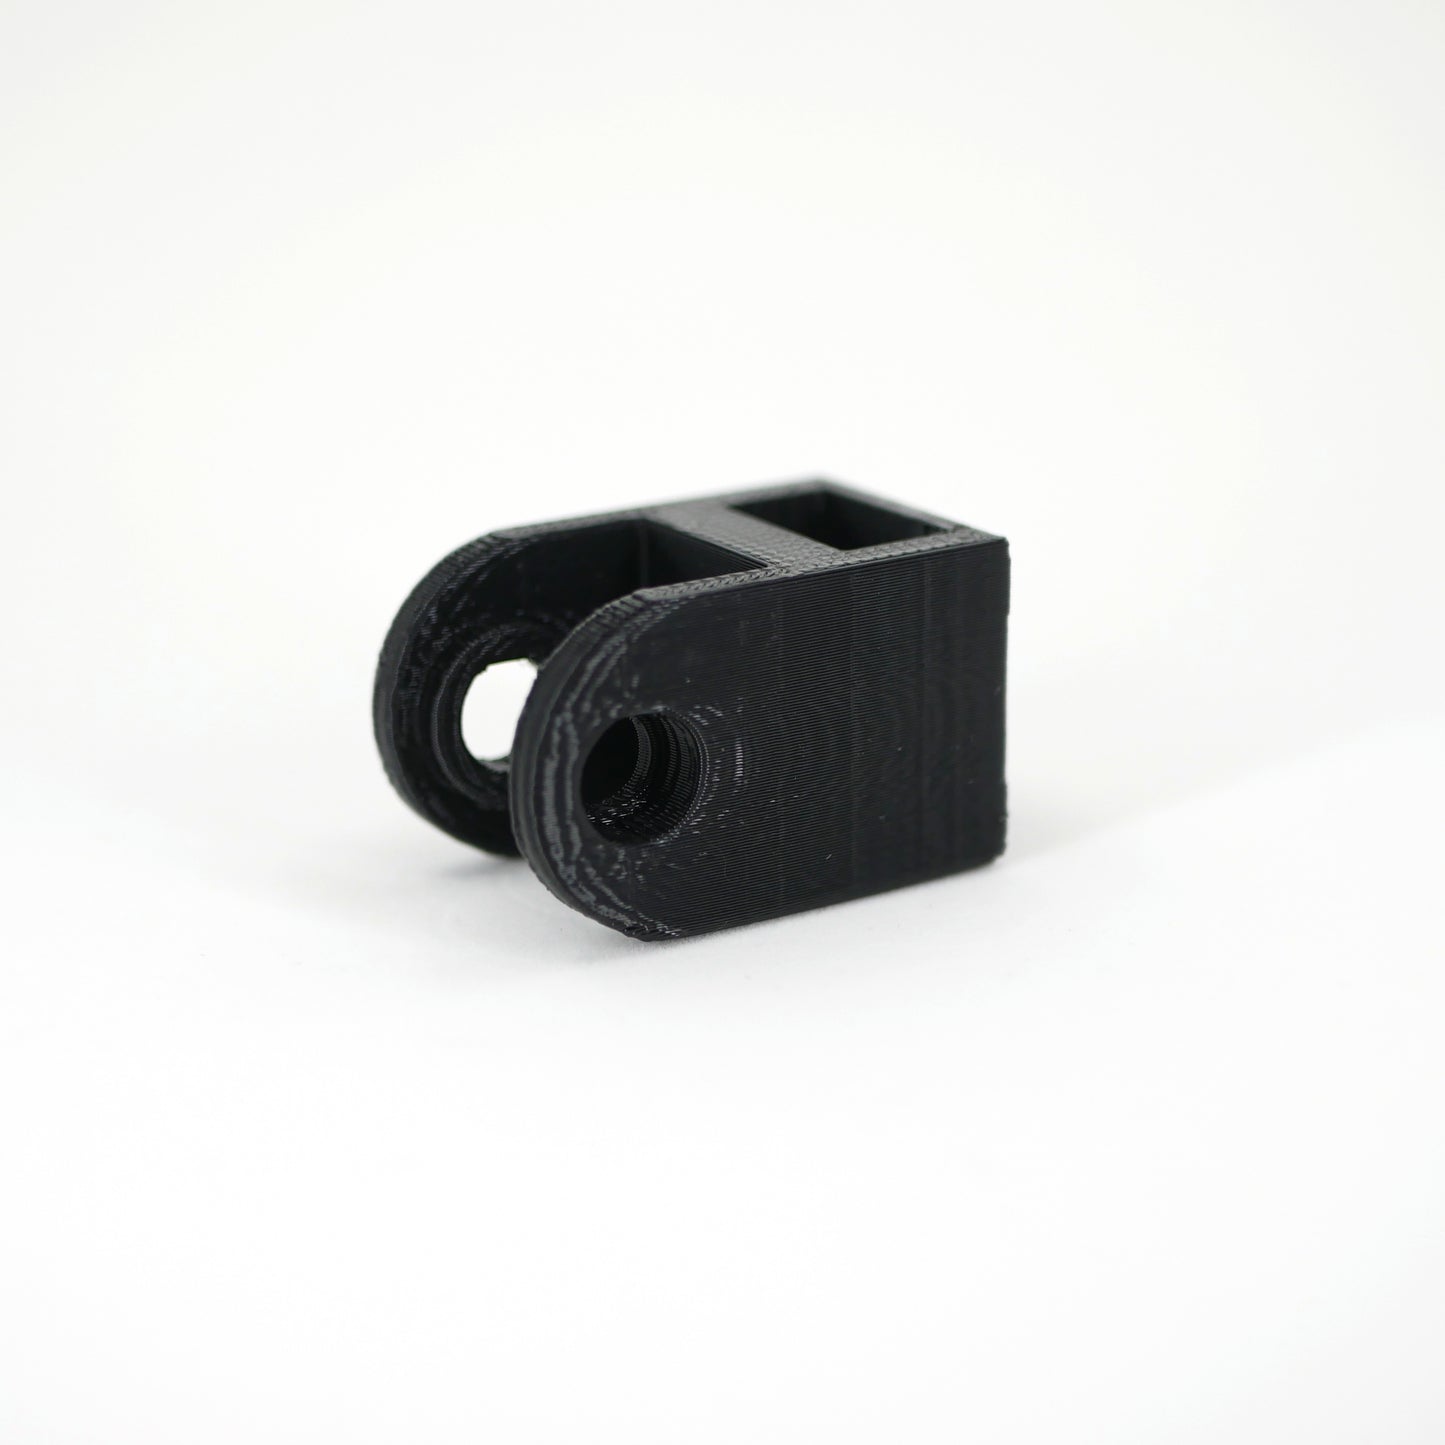 A black HyperX DuoCast microphone mount adapter.